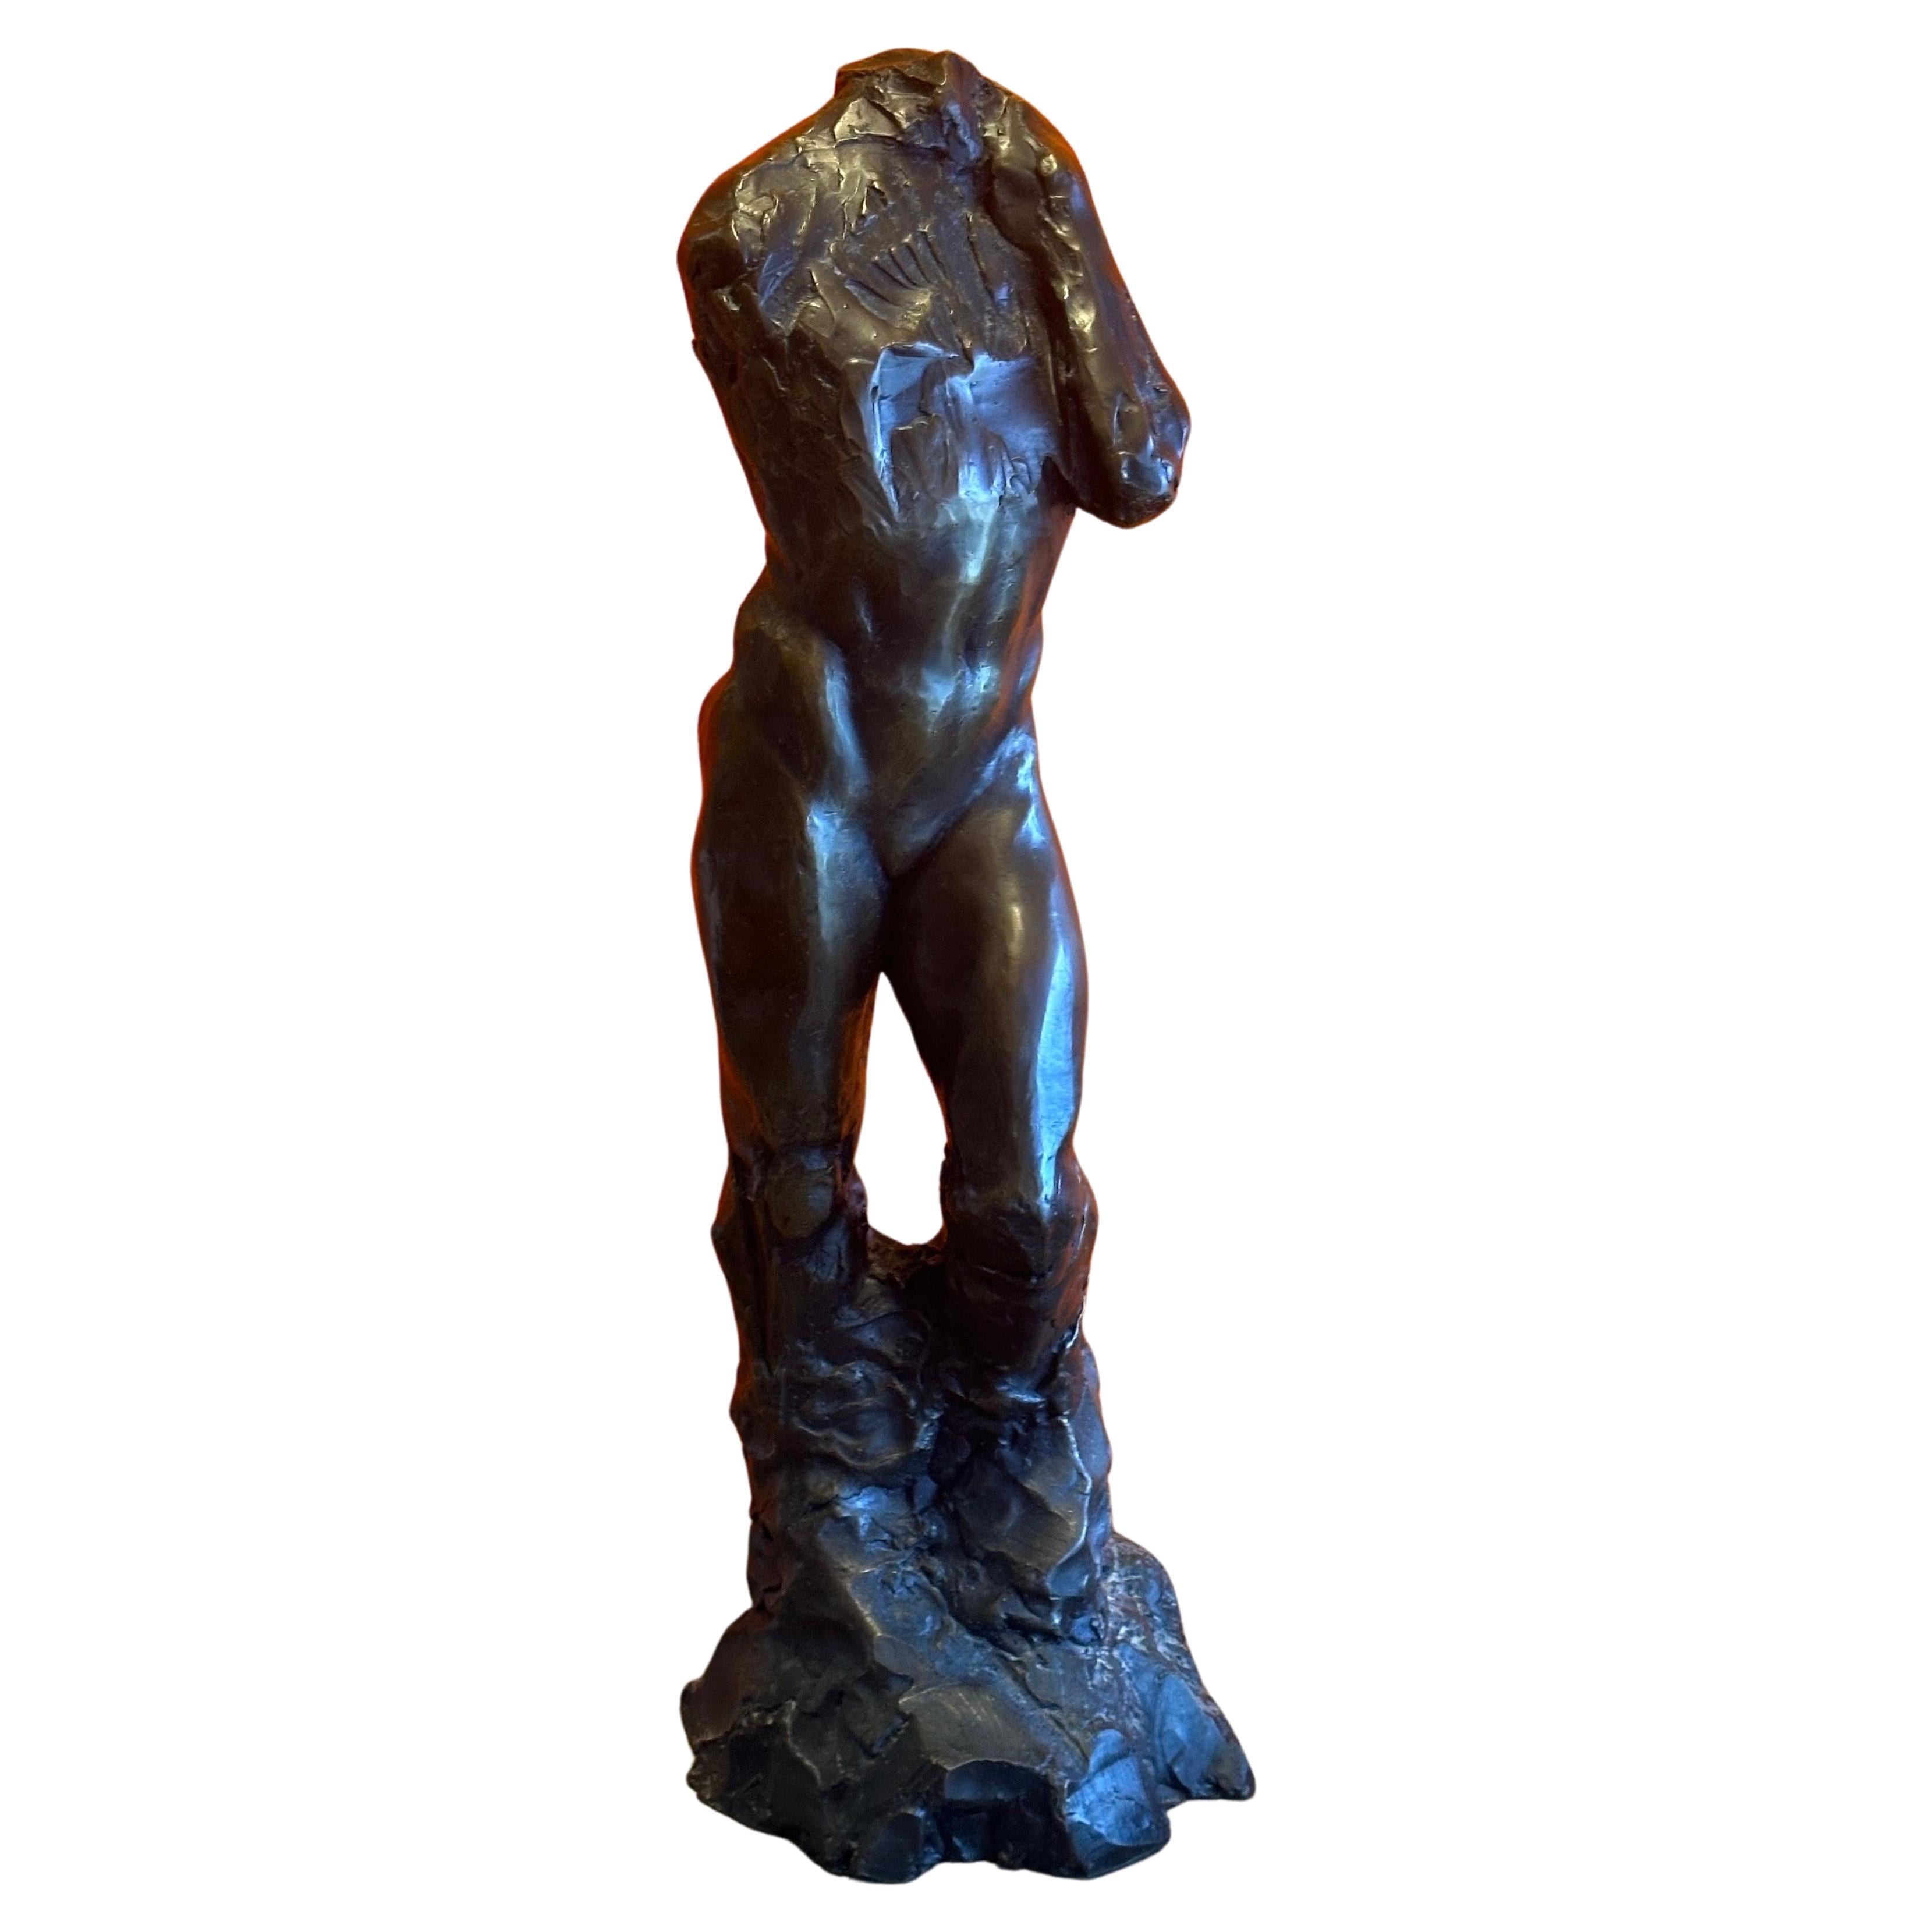 Large Figurative Bronze Sculpture Entitled "Adam's Rib" by Roark Congdon For Sale